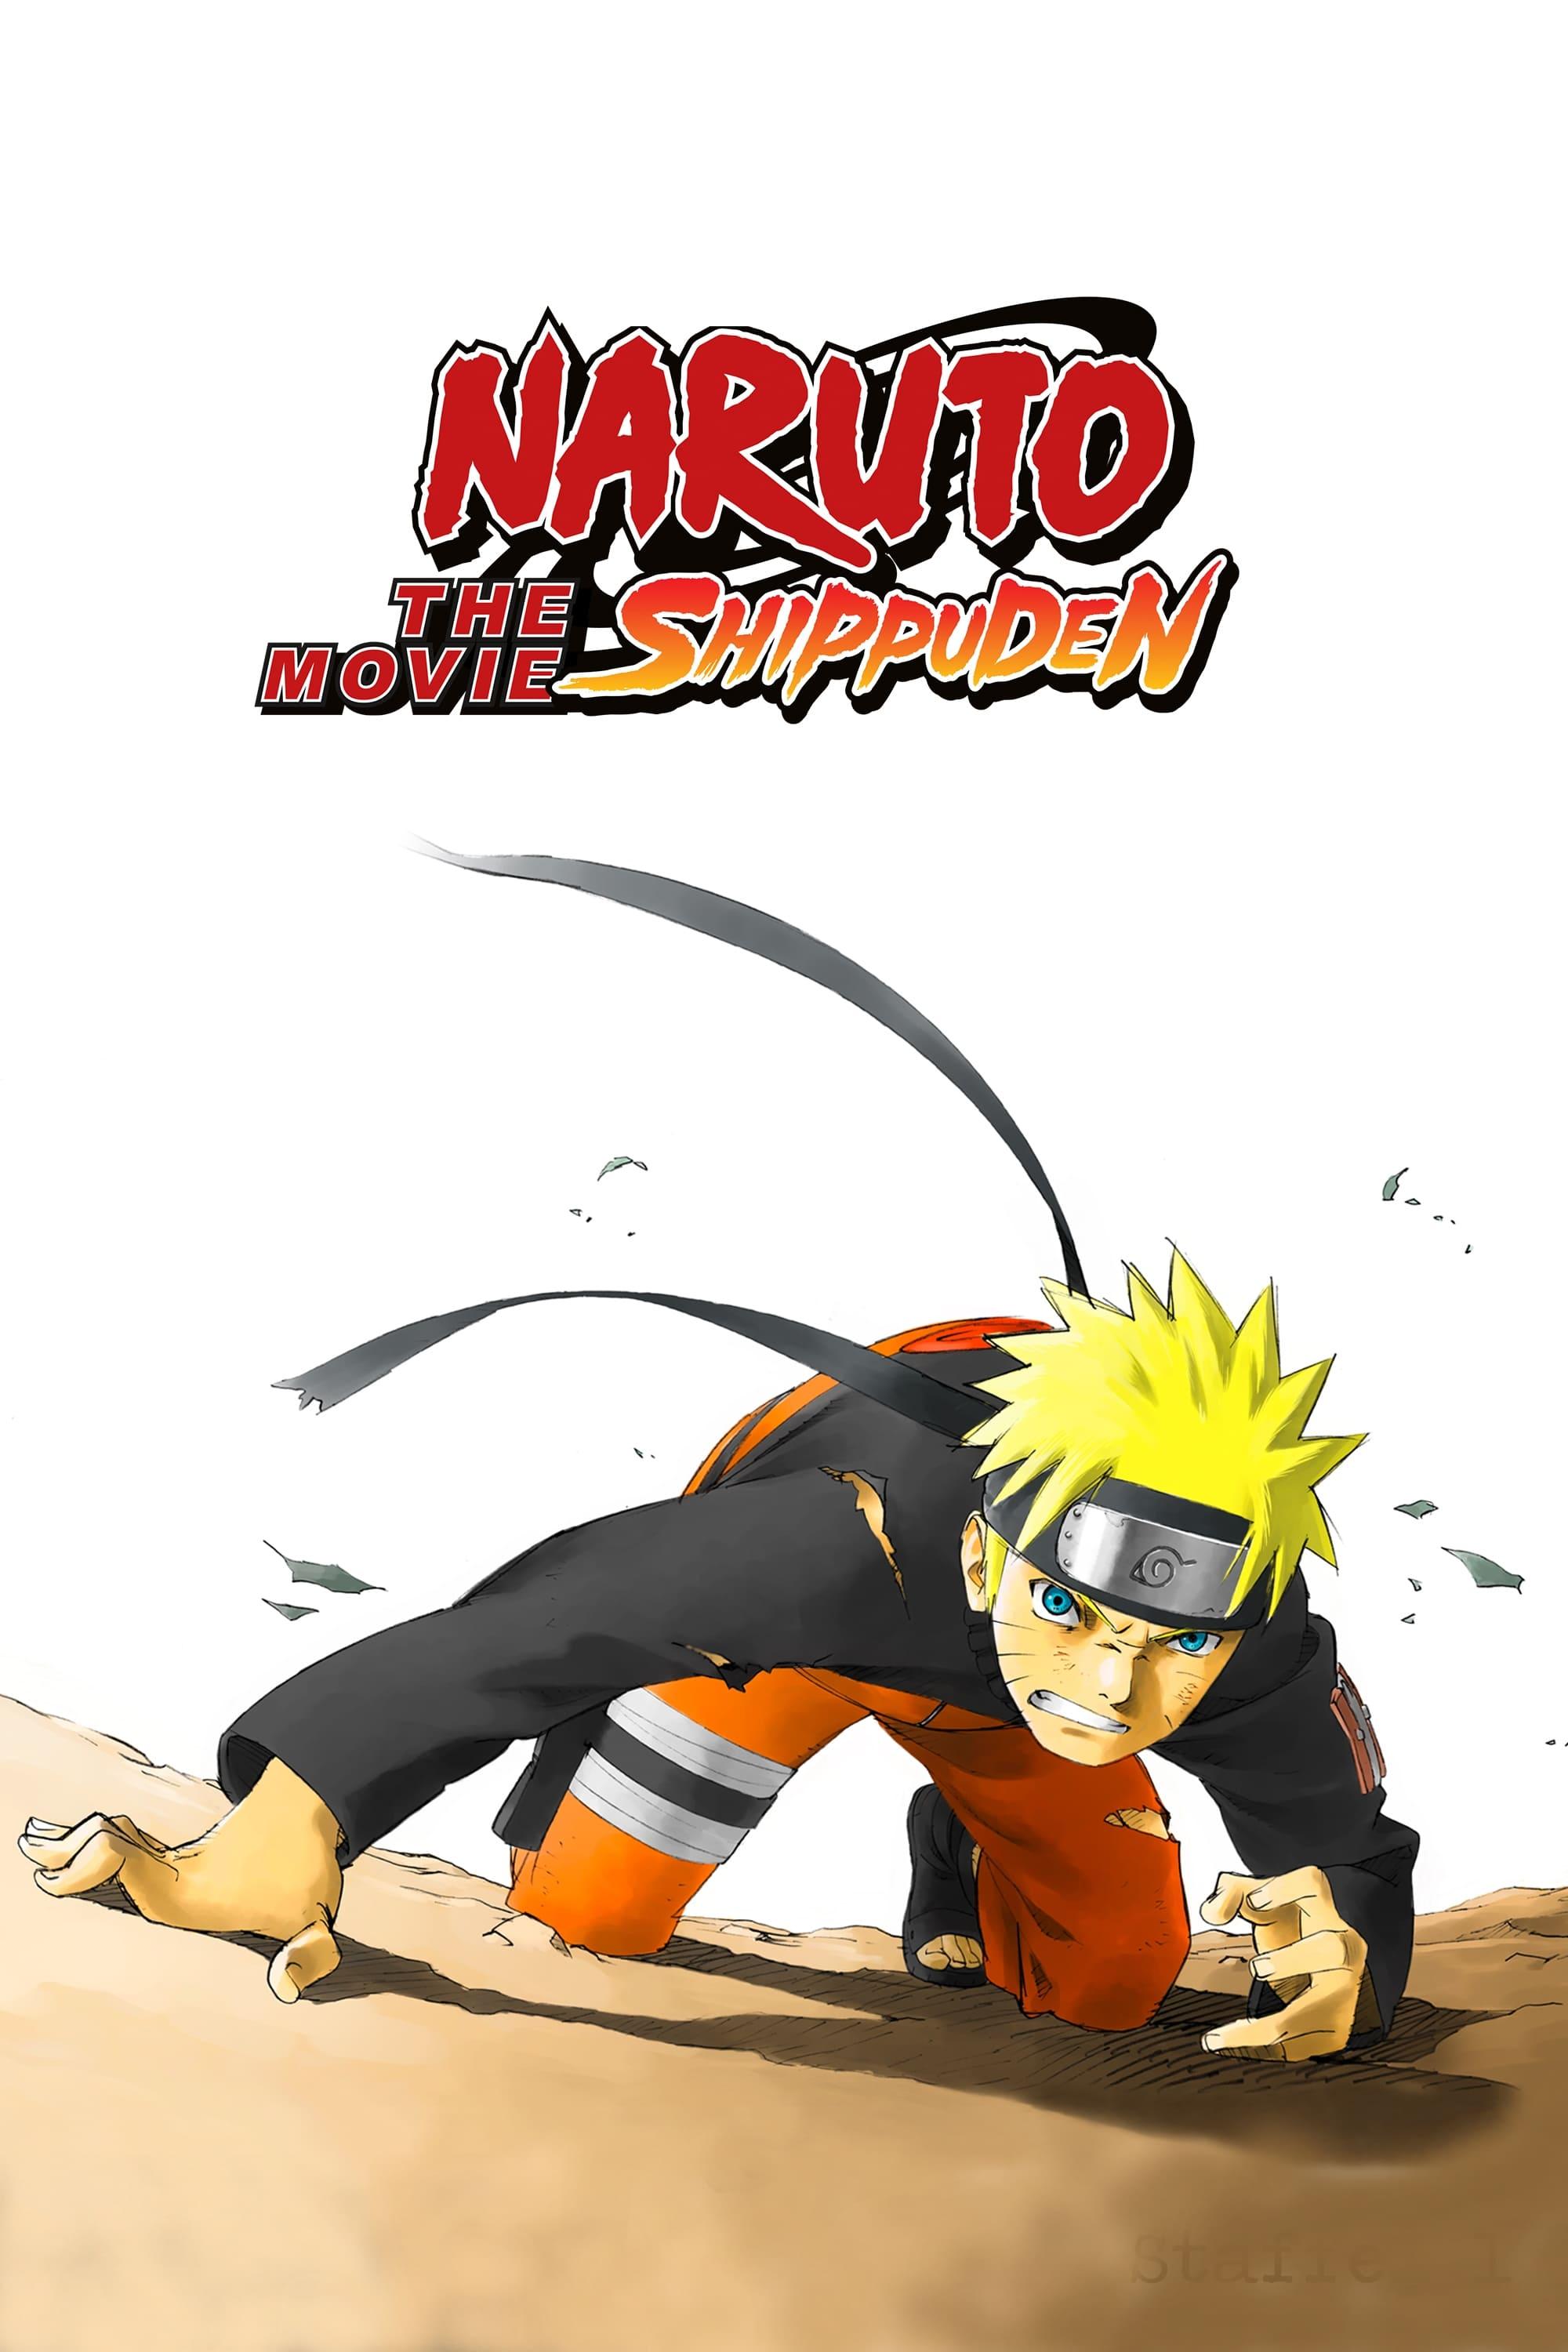 Naruto Shippuden the Movie poster